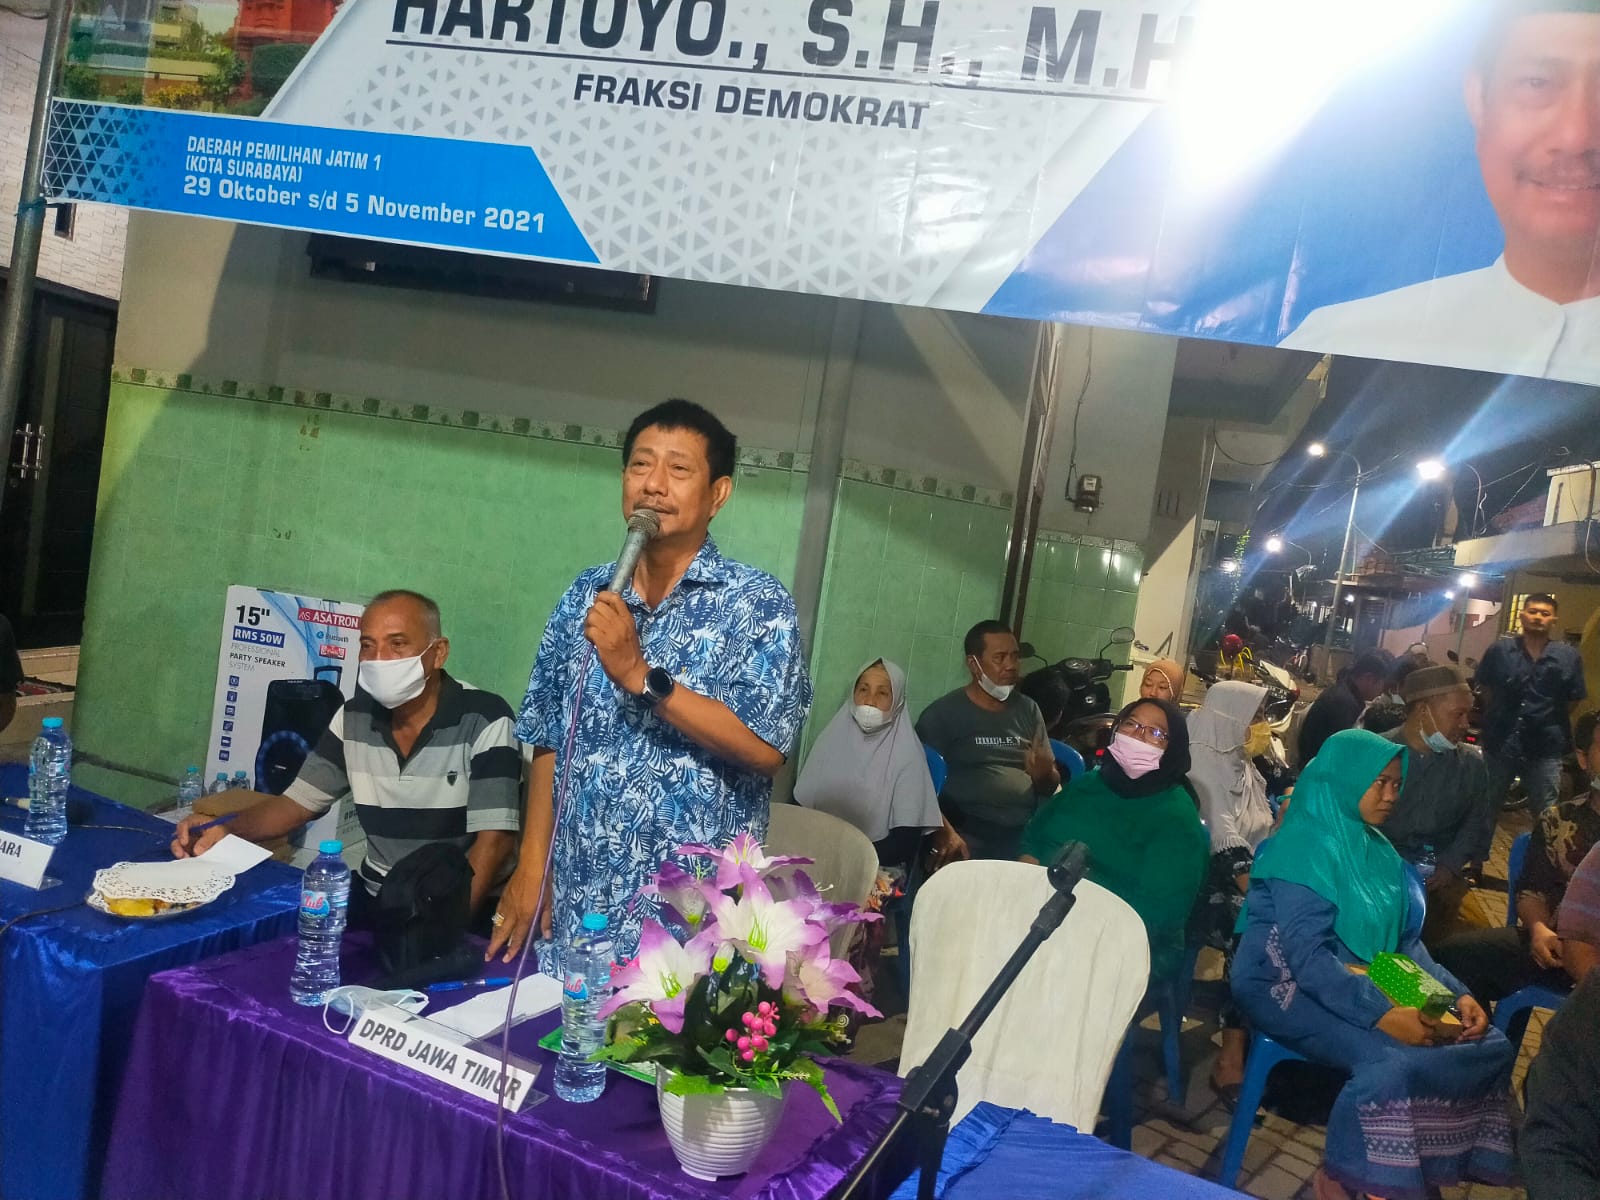 Hartoyo SH Anggota Fraksi Partai Demokrat Saat Reses di Surabaya.